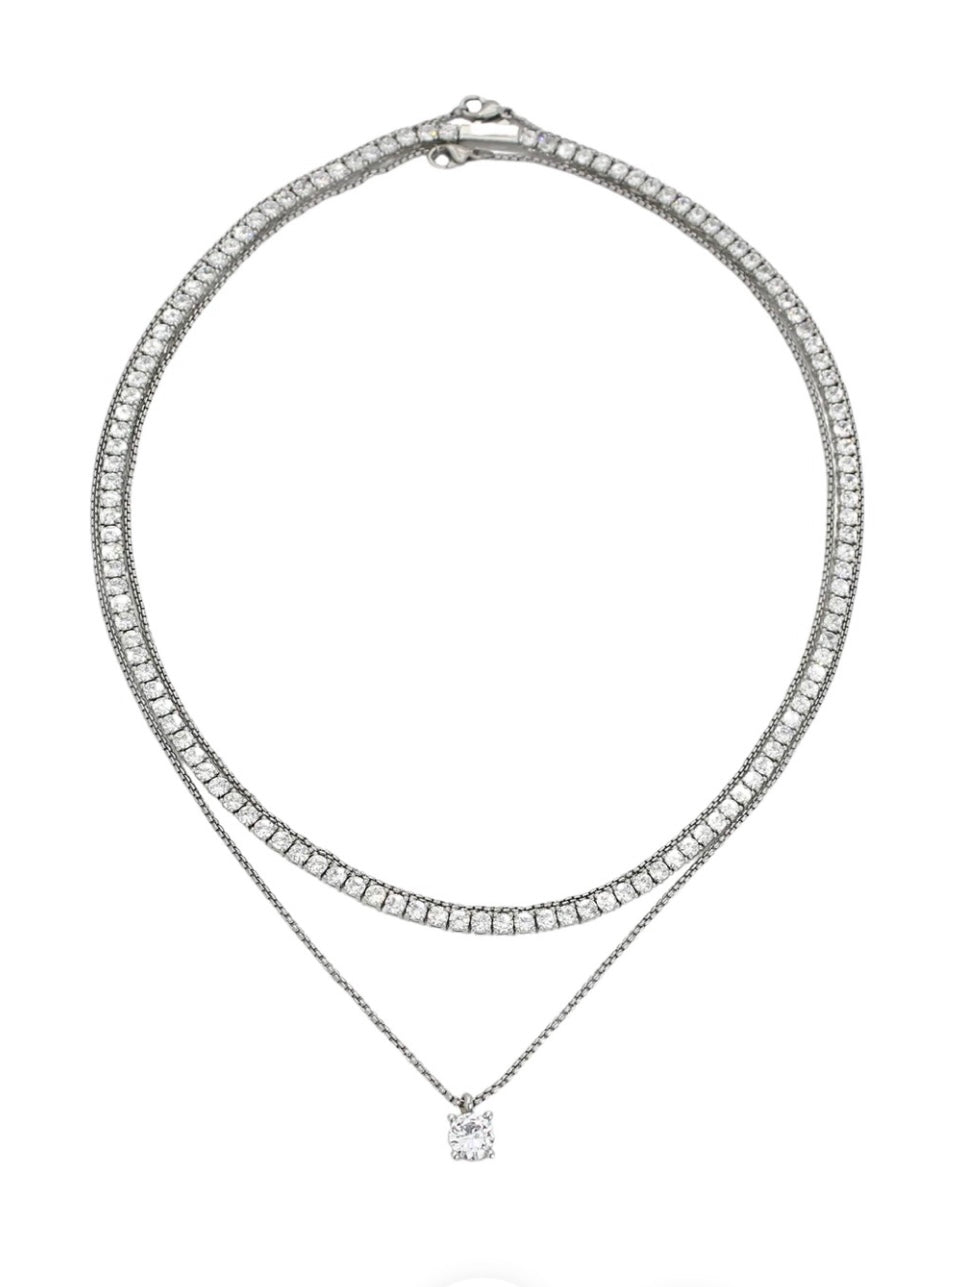 Set of 3 tennis necklaces